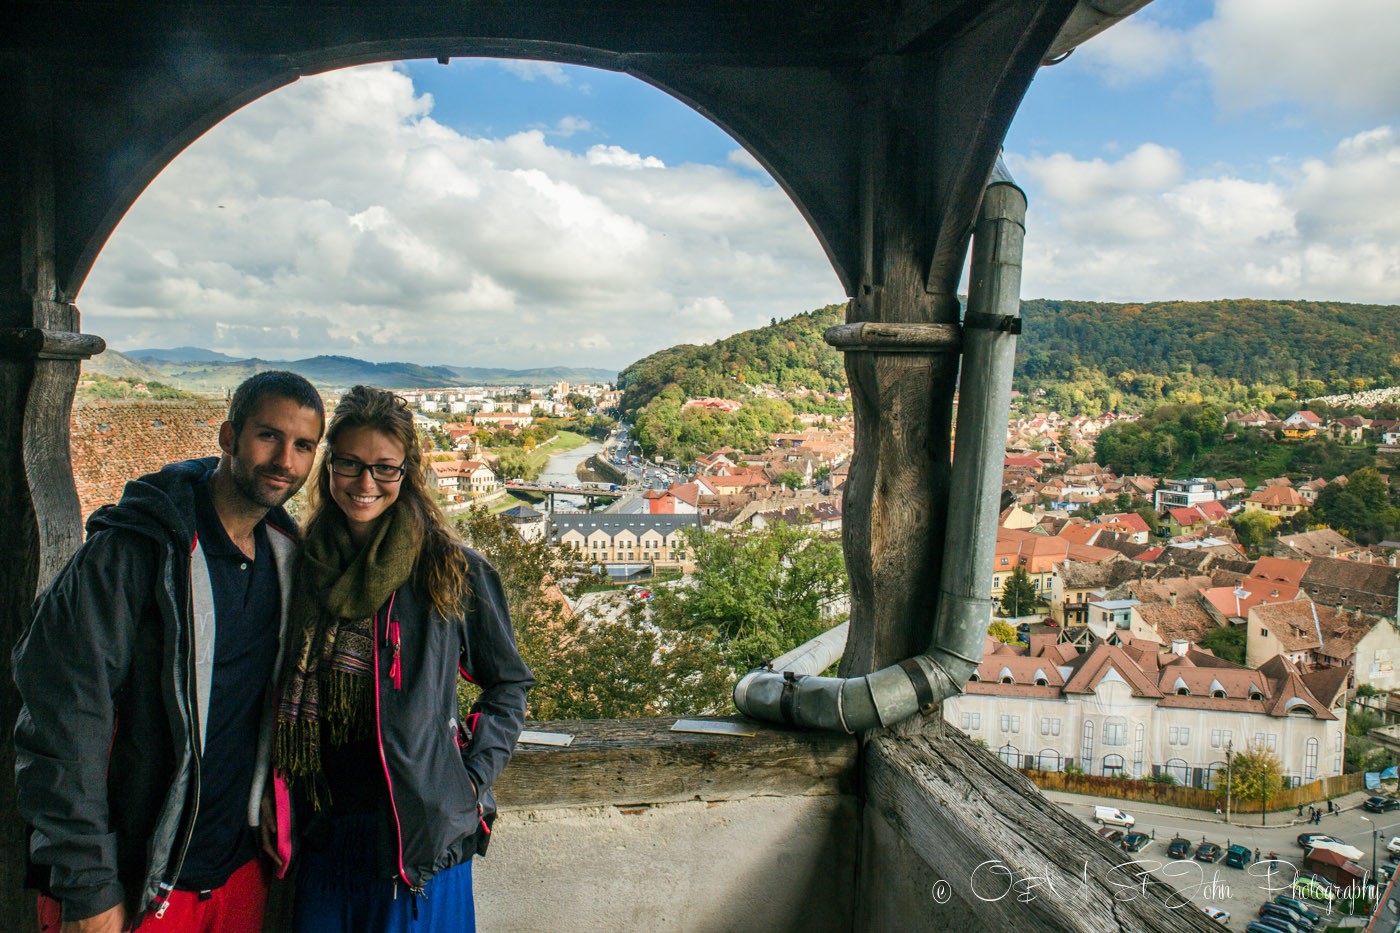 Max & Oksana at the top of Clock Tower in Sighisoara, Romania